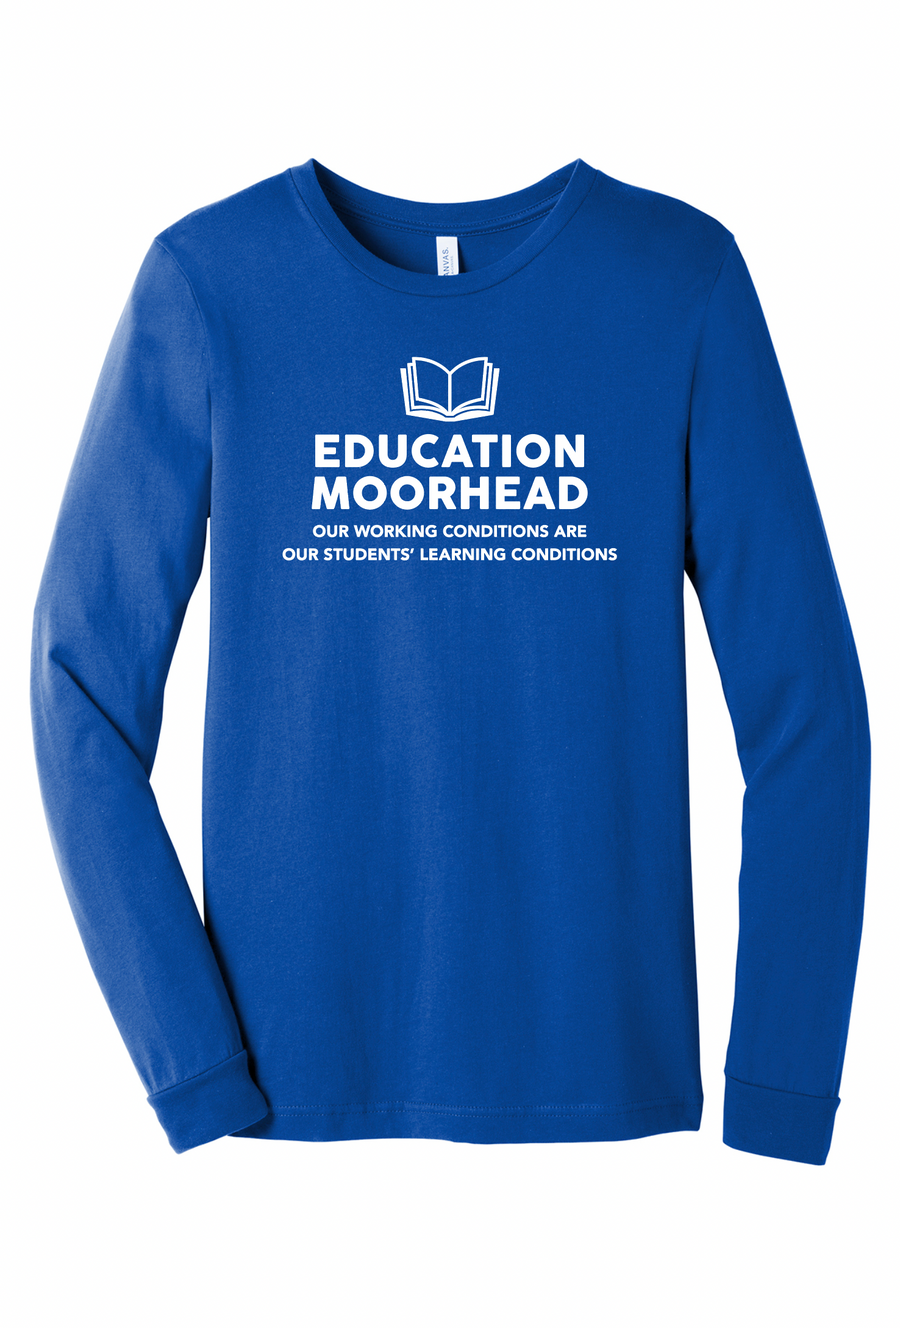 Ed MN Moorhead Unisex Long Sleeve Jersey Tee (23-Preorder) BC3501